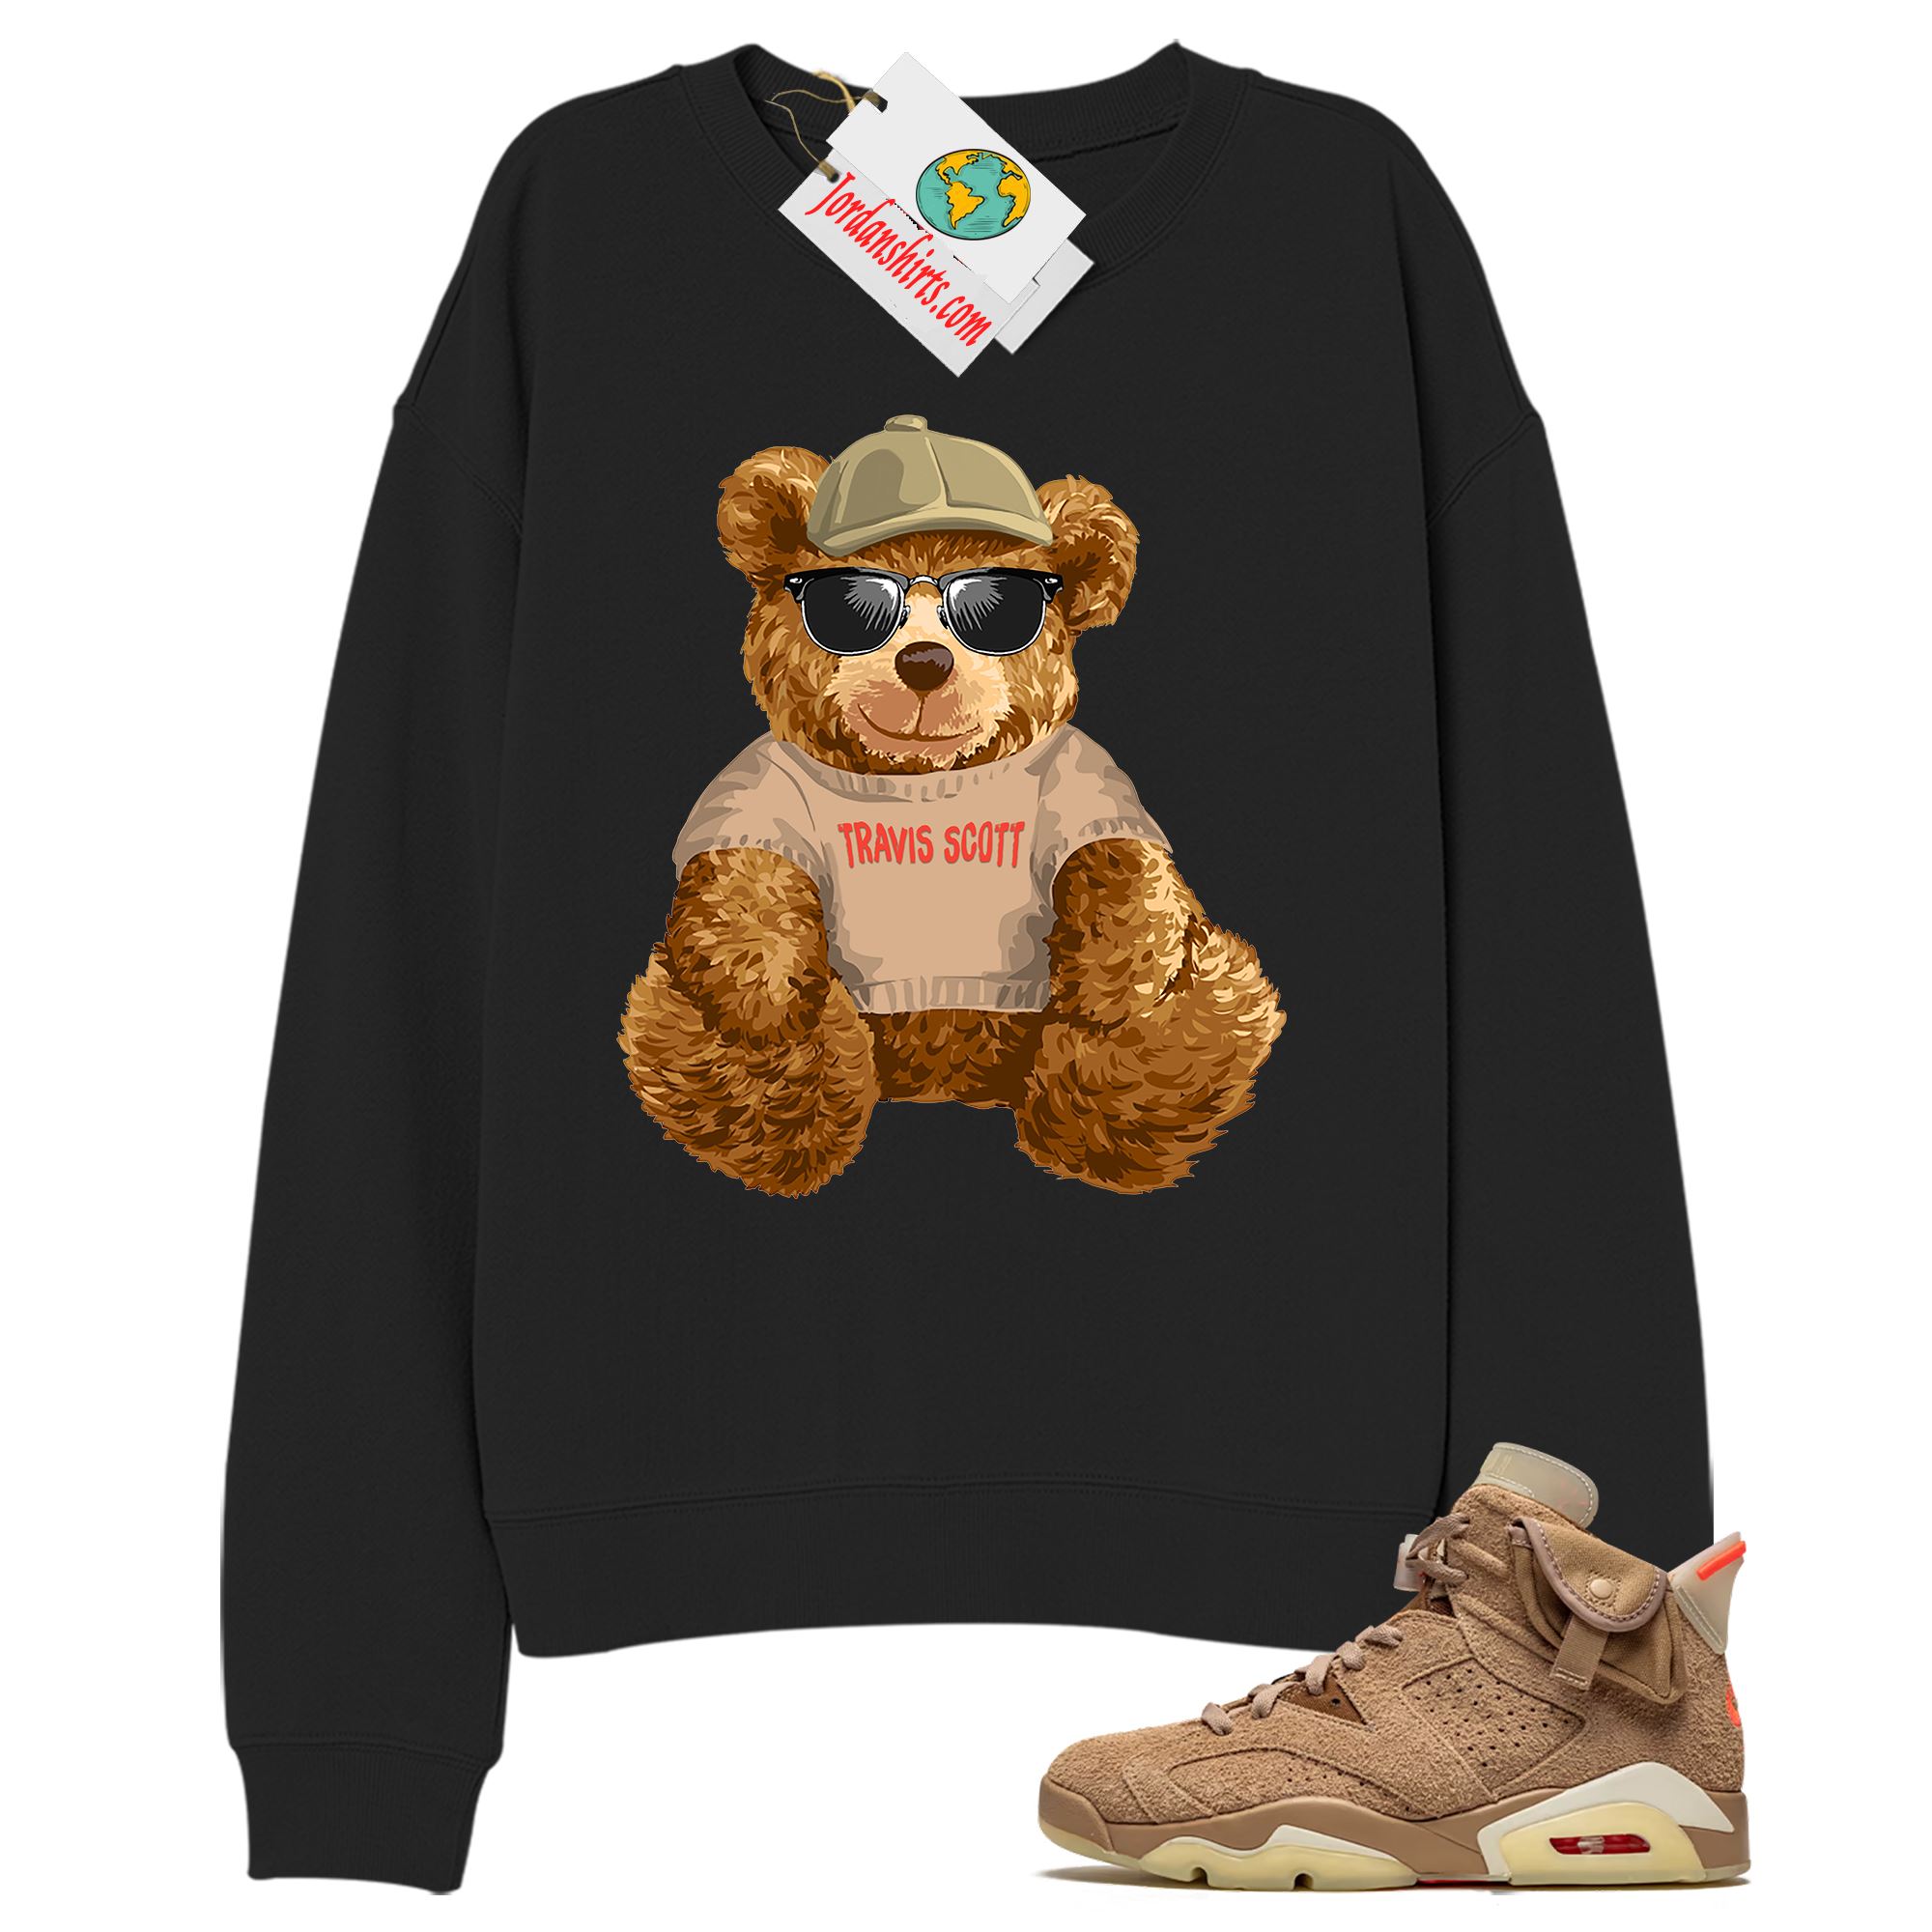 Jordan 6 Sweatshirt, Teddy Bear With Sunglasses Hat Black Sweatshirt Air Jordan 6 Travis Scott 6s Size Up To 5xl